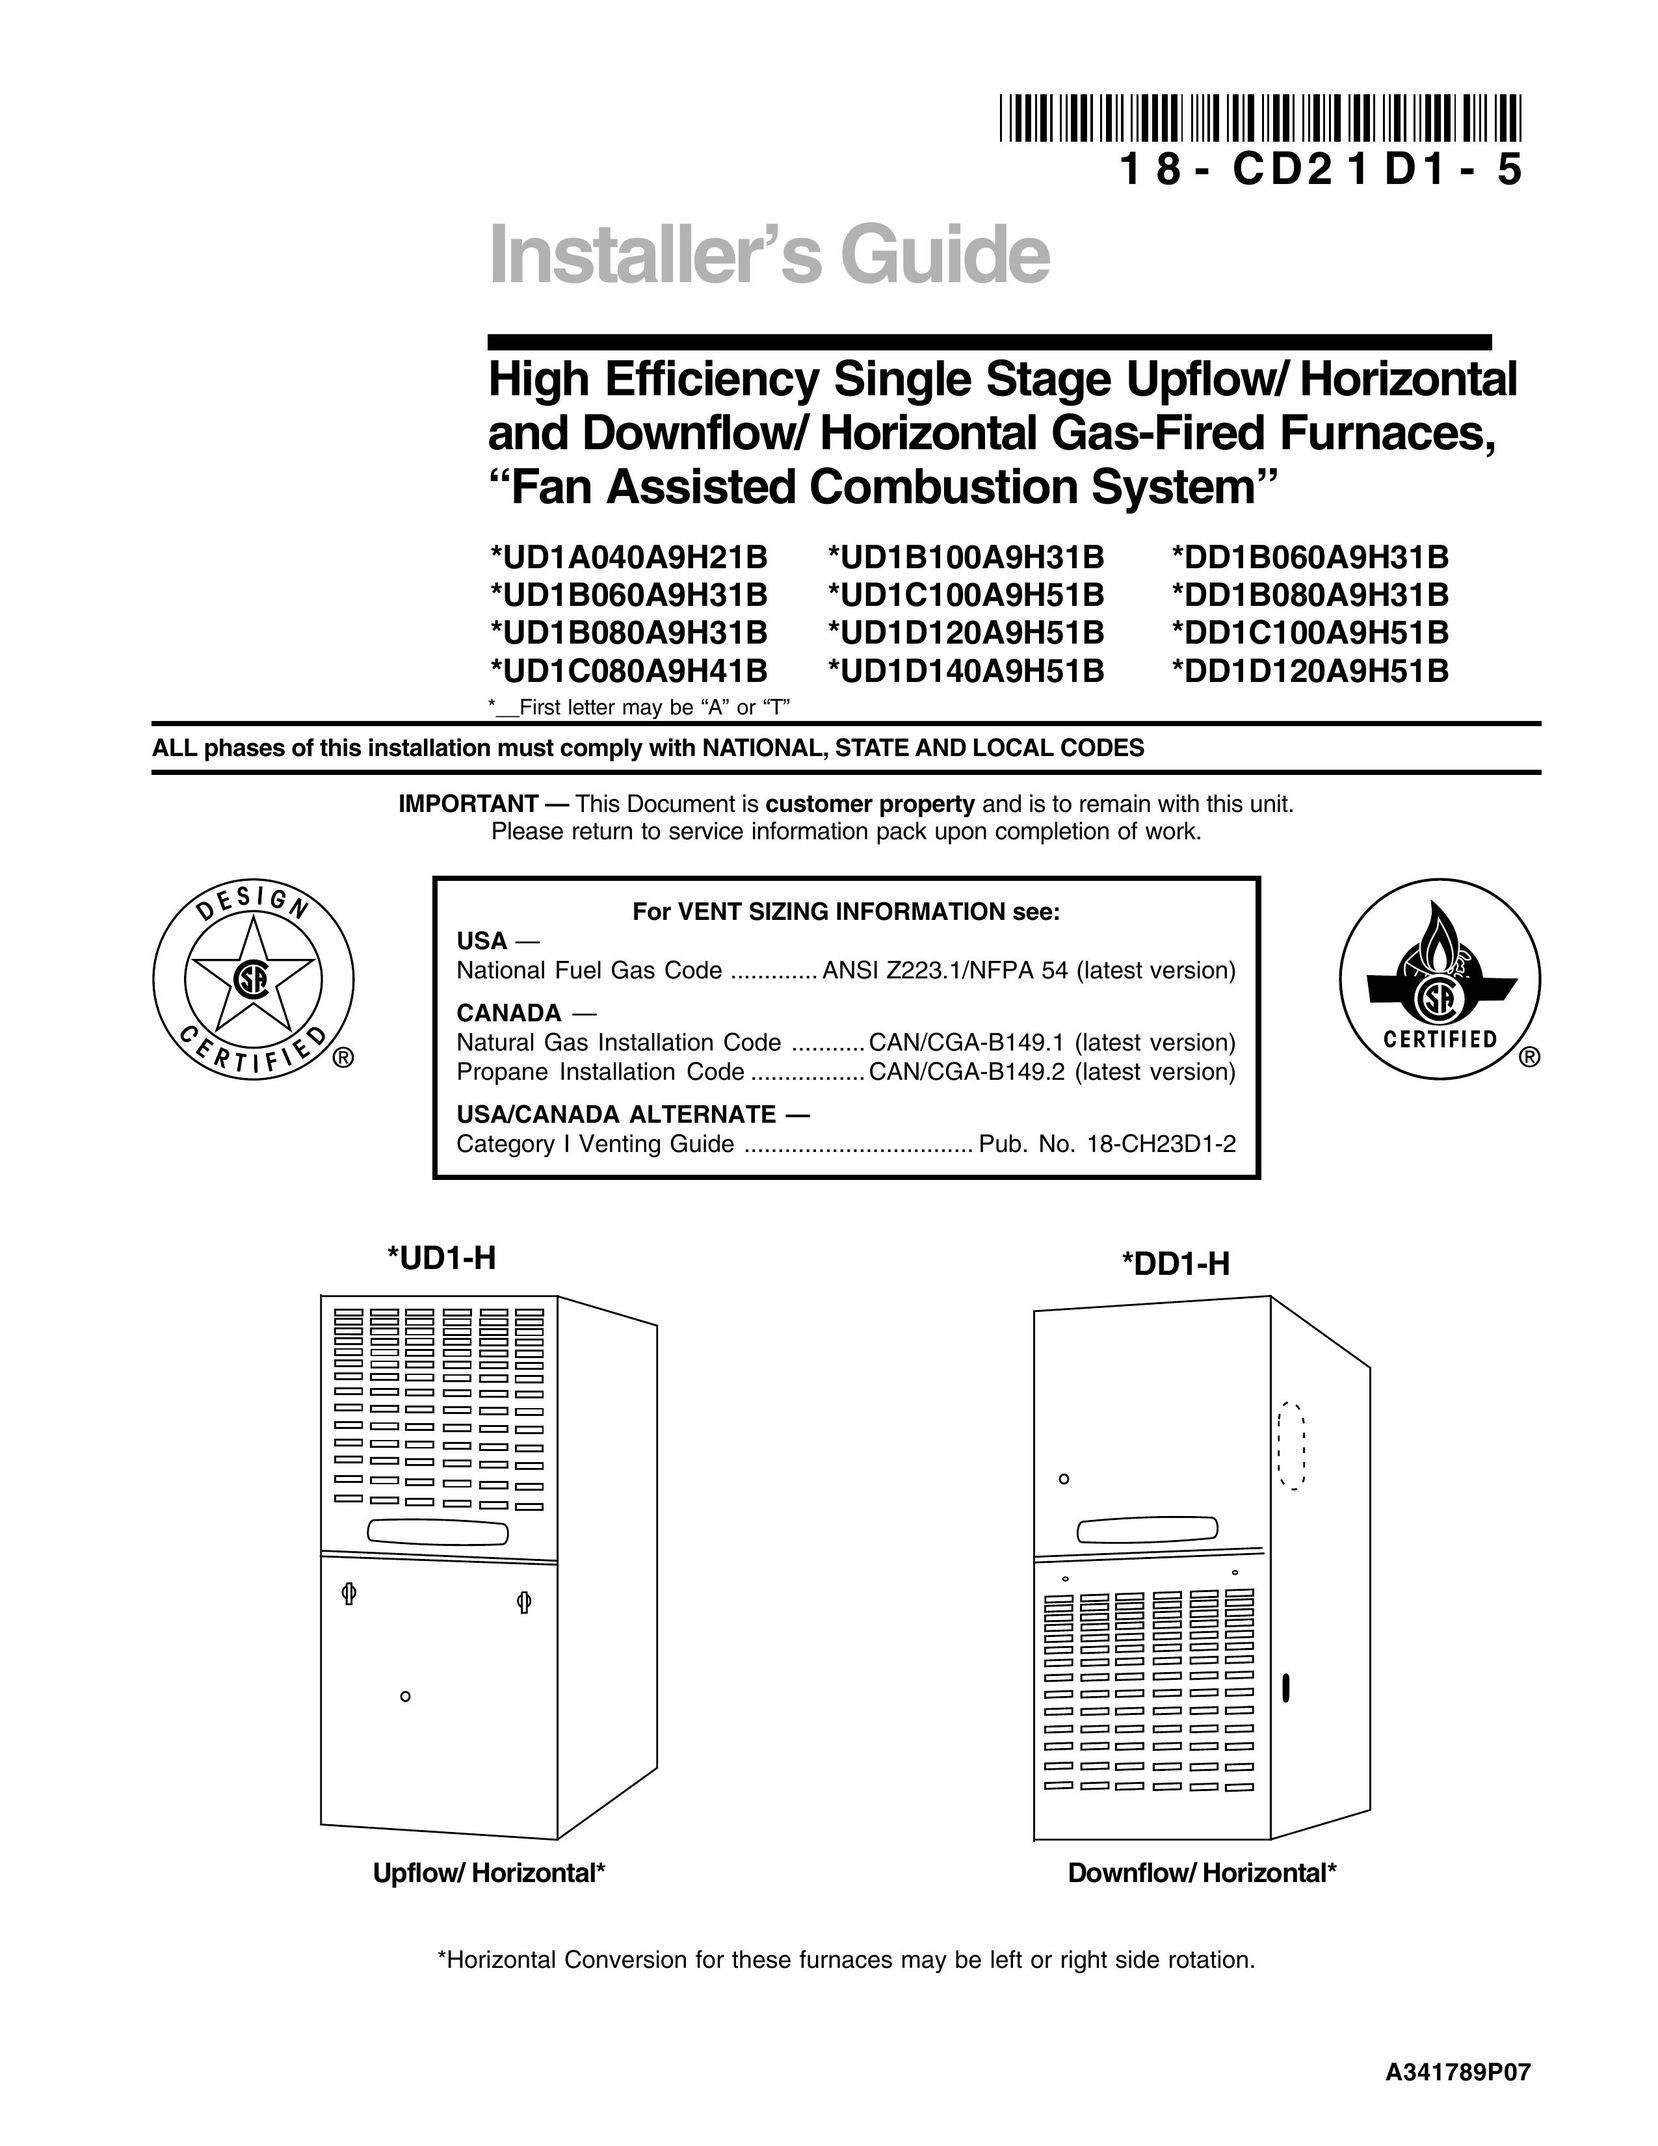 Trane UD1B100A9H31B Furnace User Manual